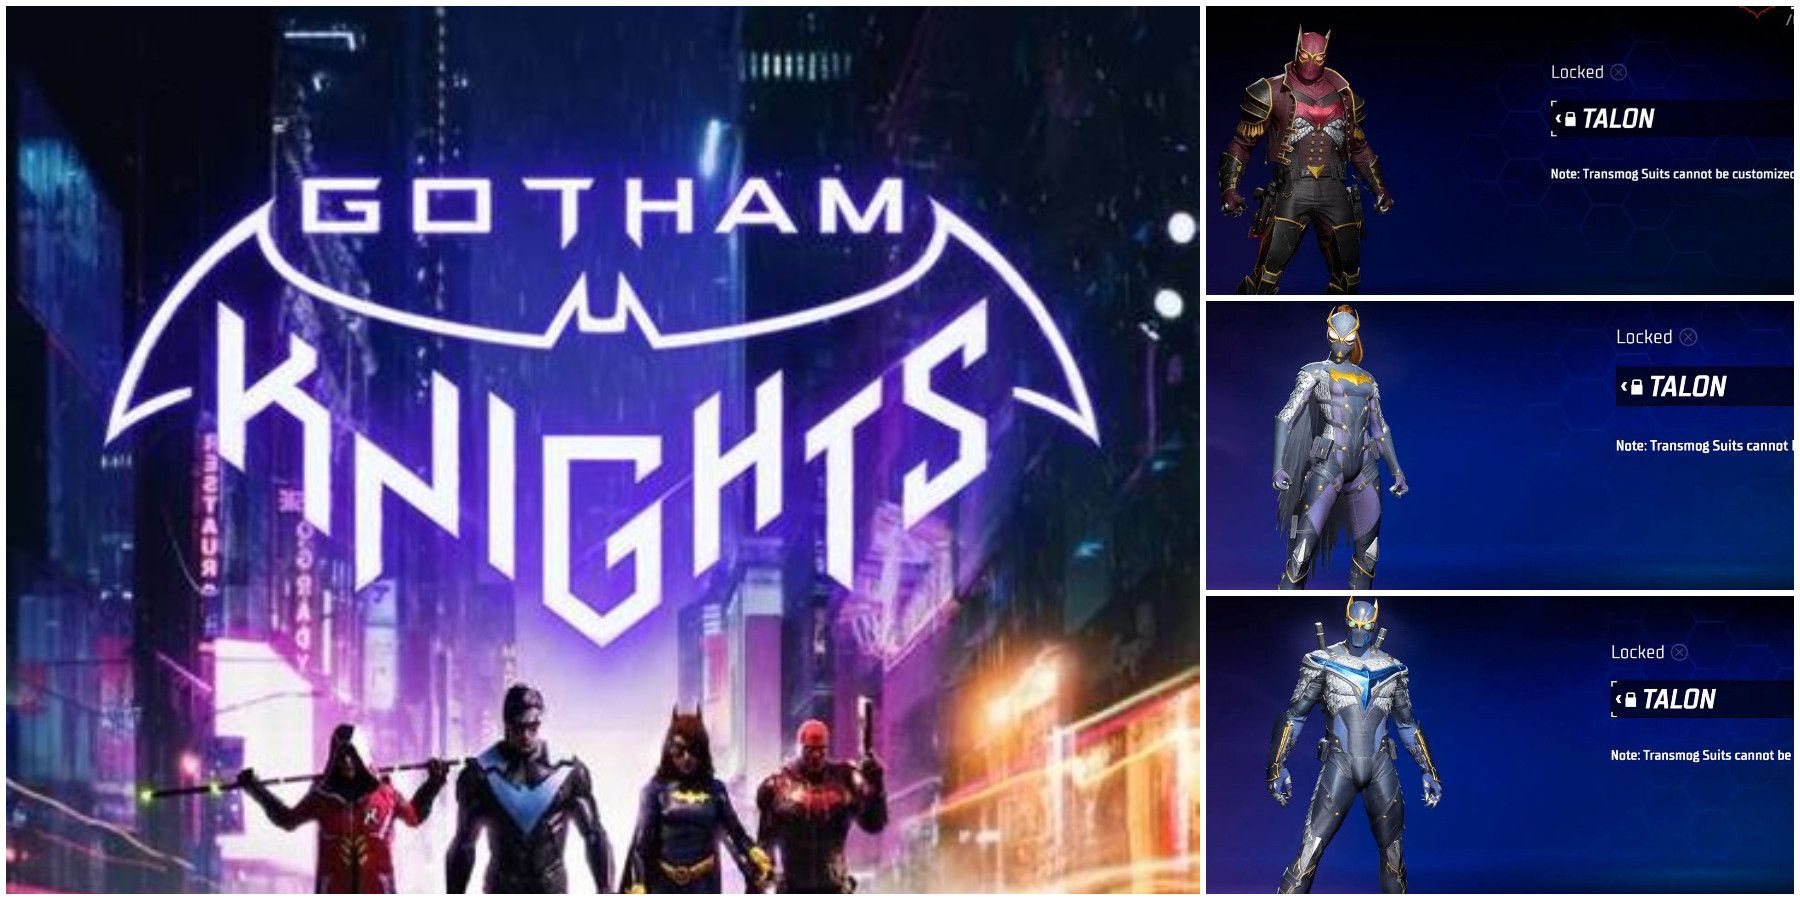 Gotham Knights walkthrough, tips, guides